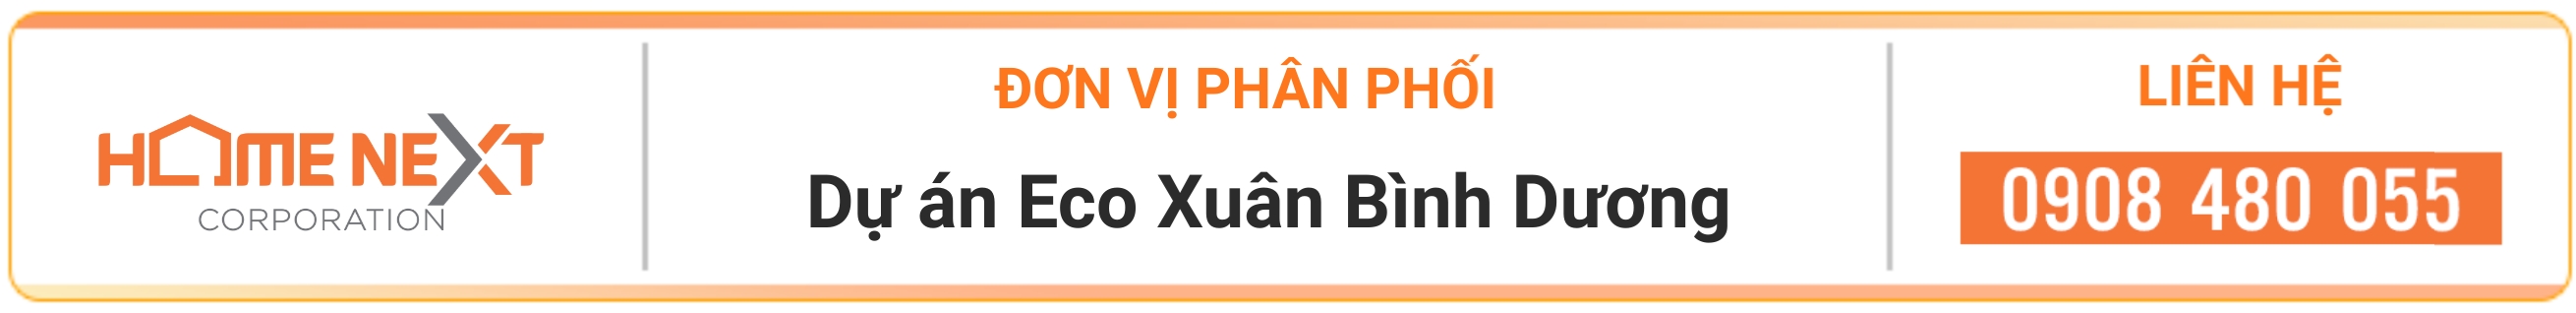 -banner-don-vi-phan-phoi-ecoxuan-